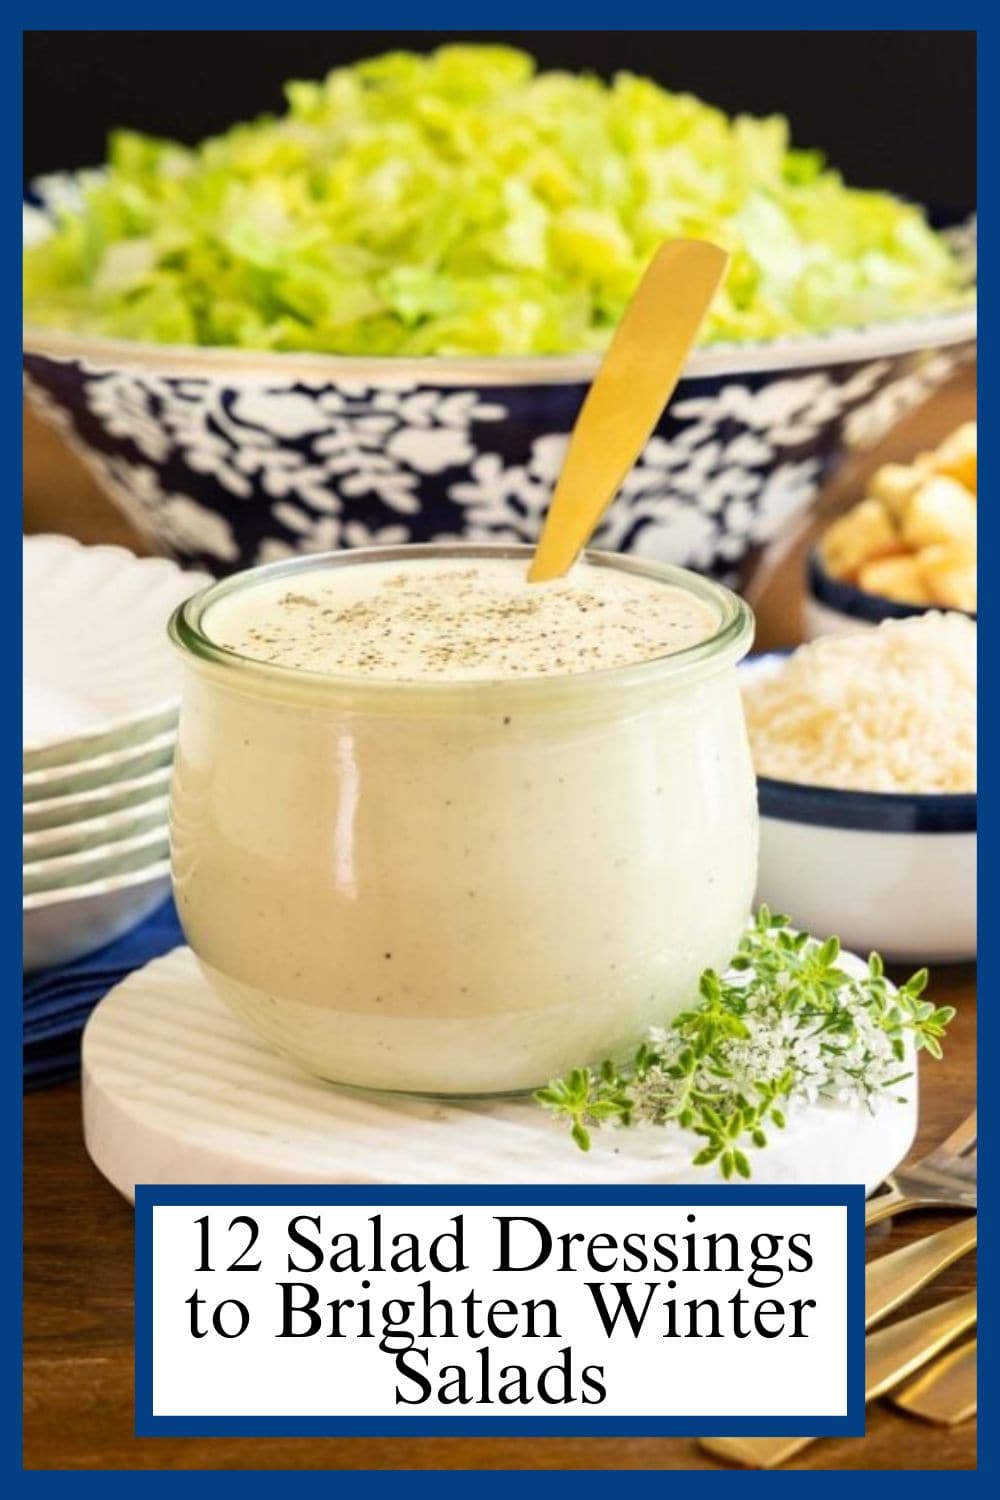 12 Easy Salad Dressings to Brighten Winter Salads